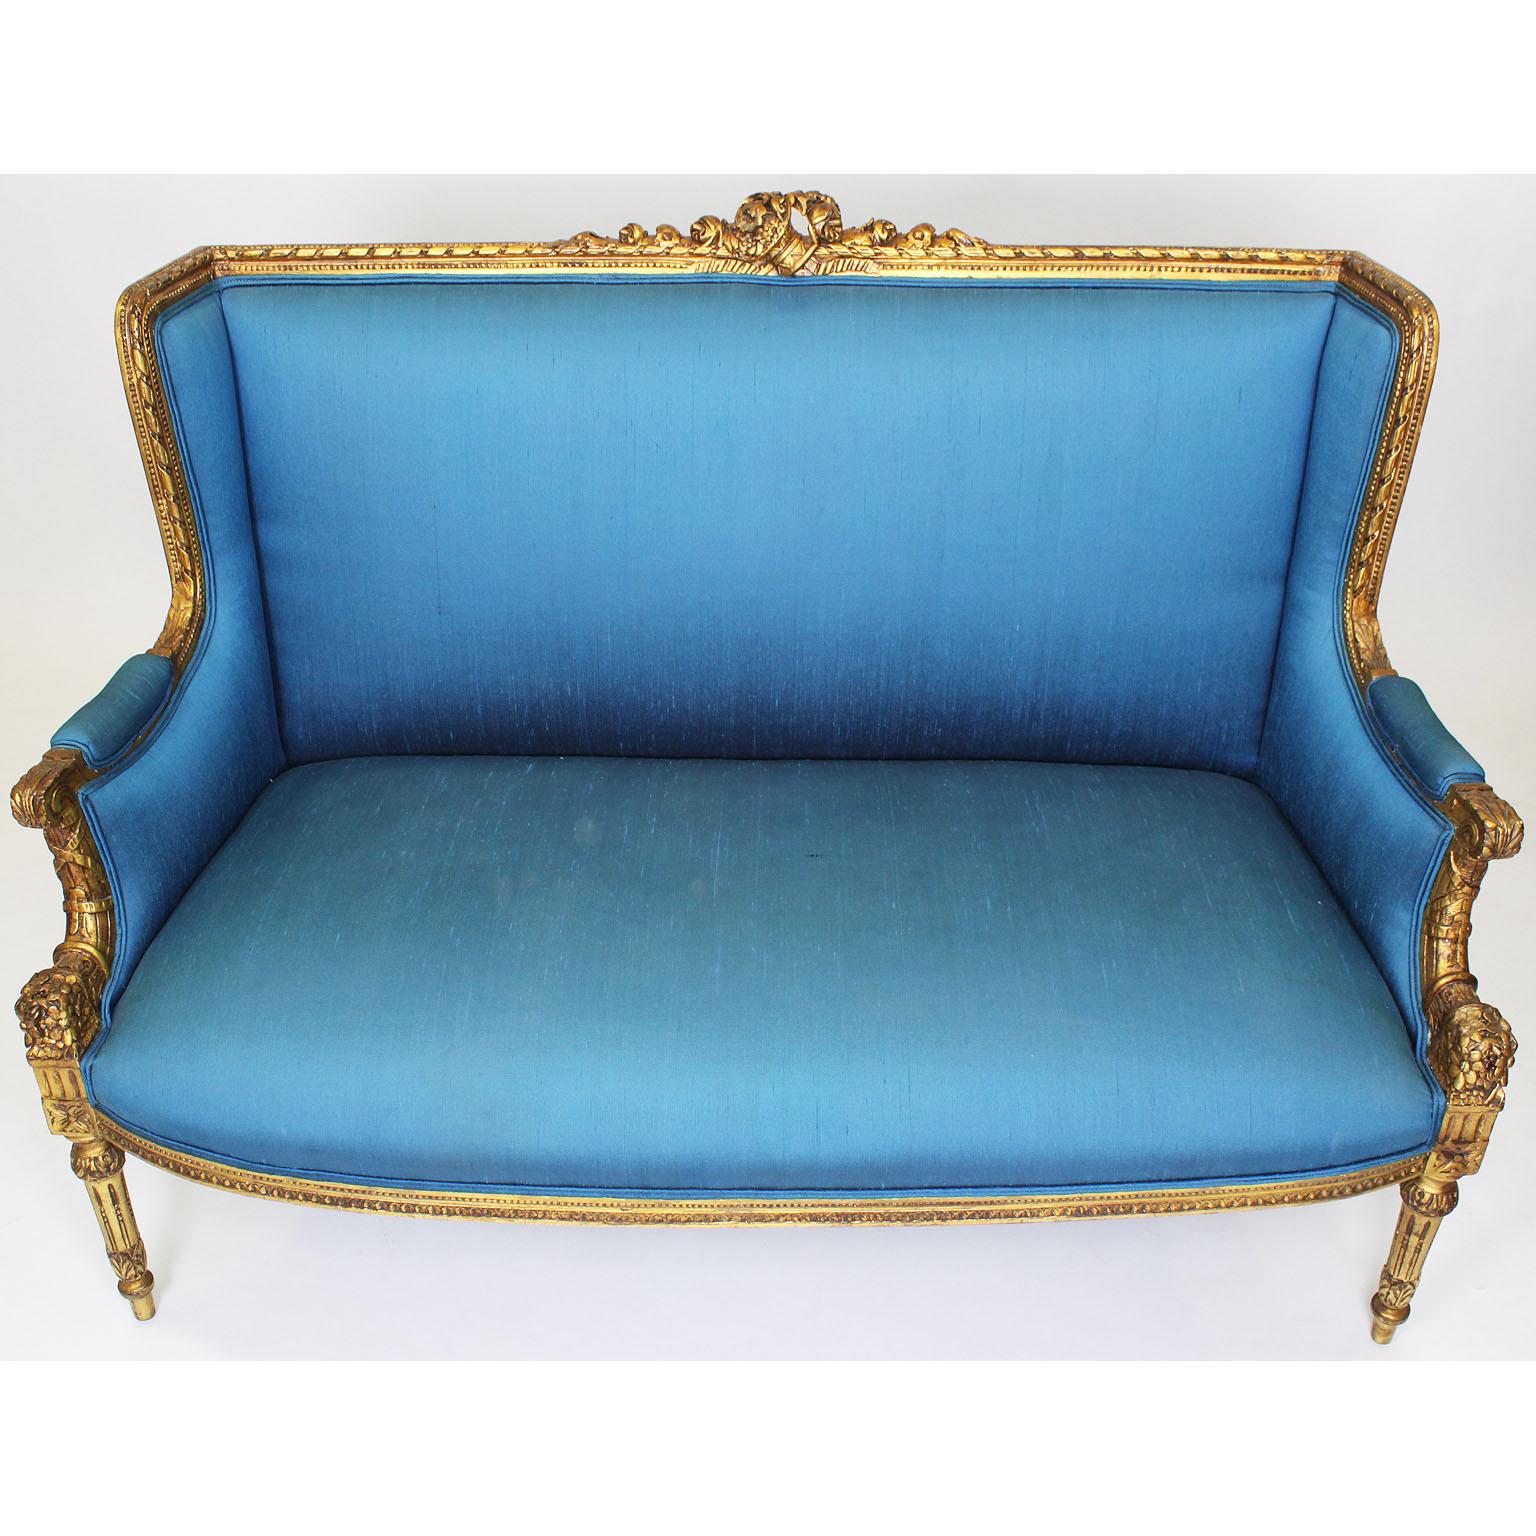 Early 20th Century French 19th-20th Century Belle Époque Louis XVI Style Bergère Giltwood Salon Set For Sale